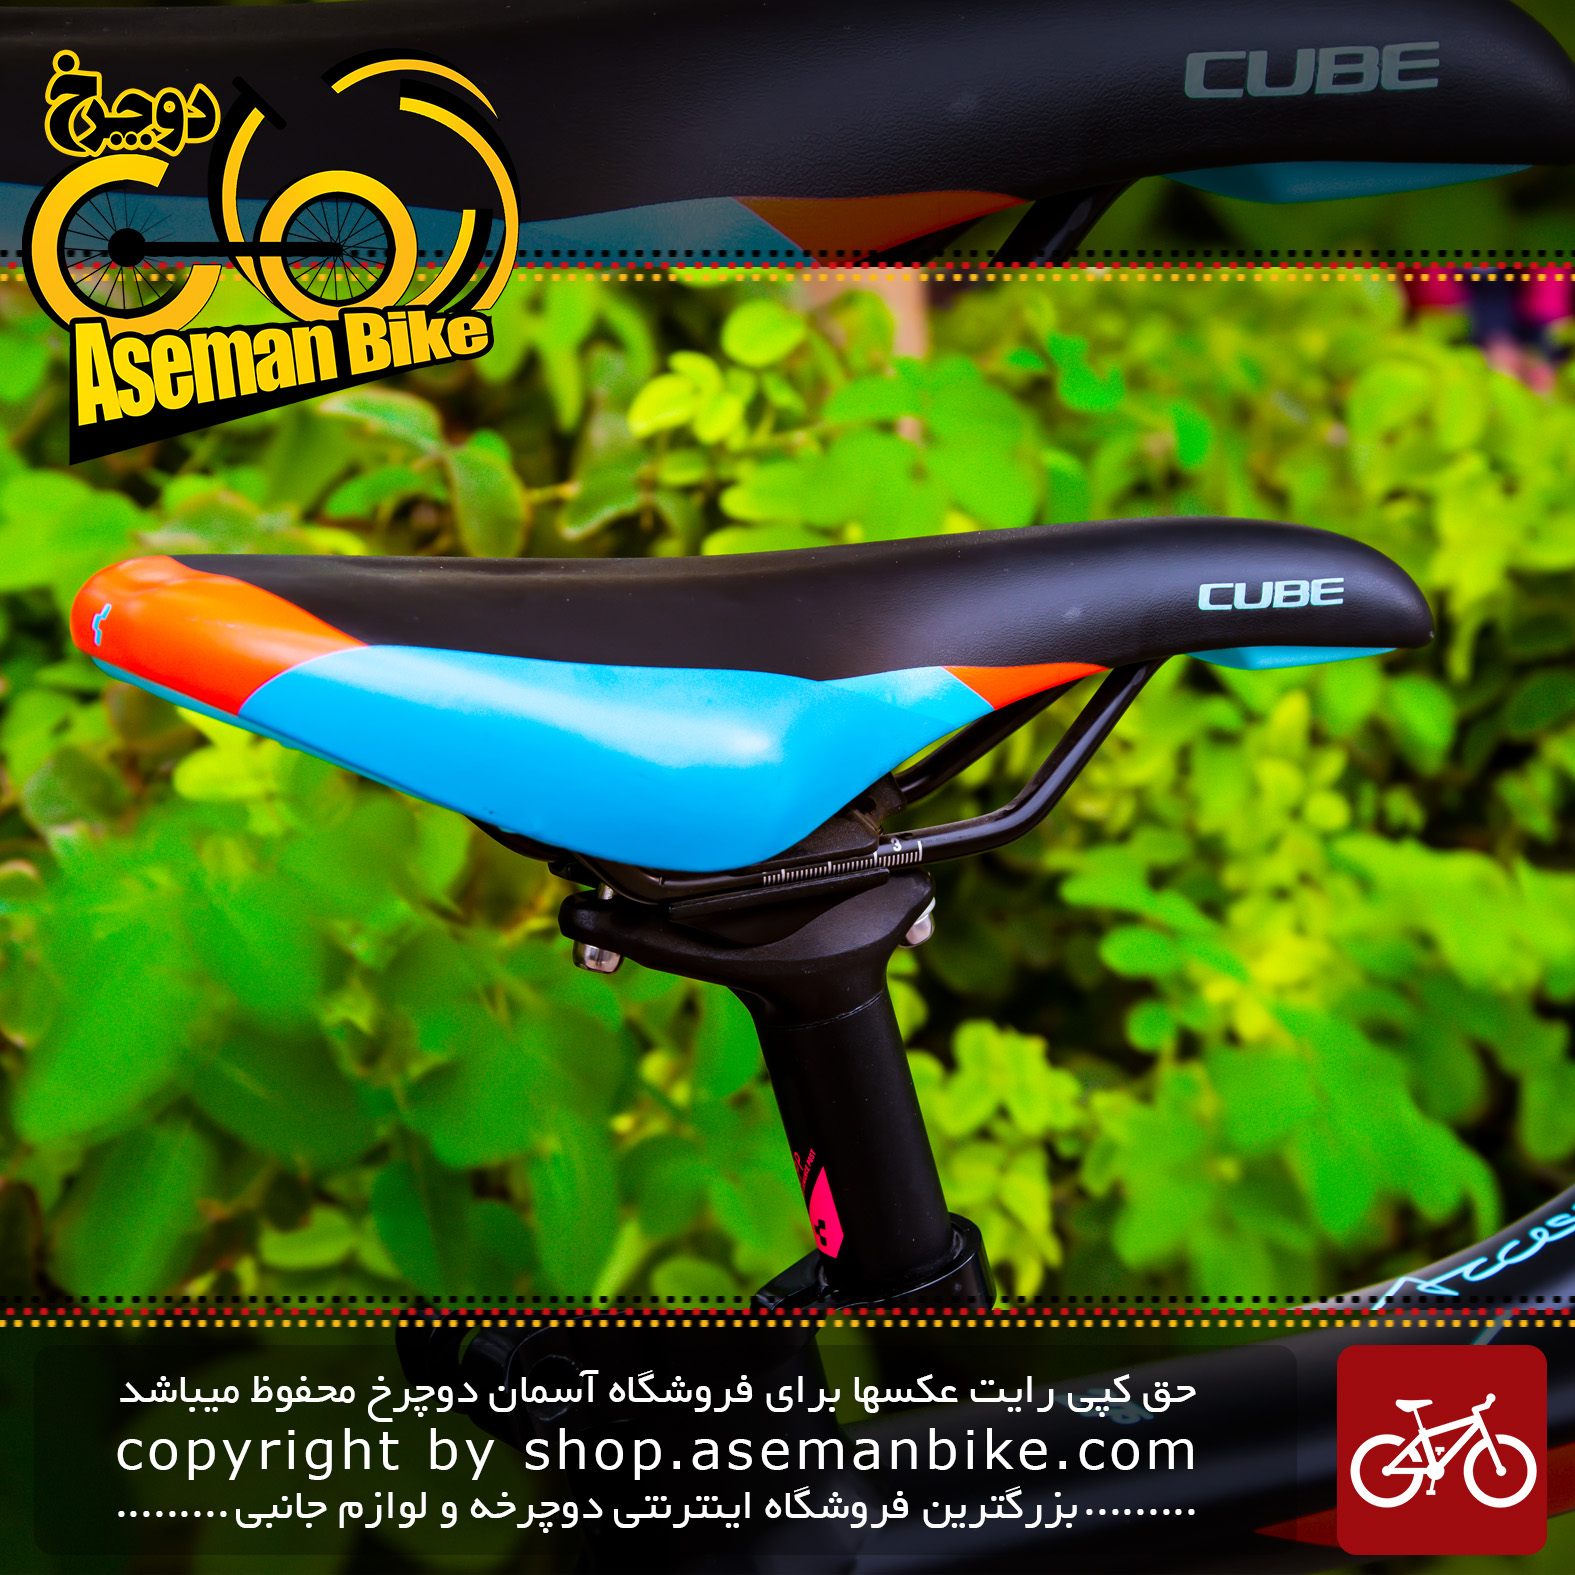 دوچرخه کوهستان بانوان کیوب مدل اکسس دبلیو ال اس دیسک سایز 27.5 2017 Cube Mountain Bike Lady Access WLS Disc 27.5 2017